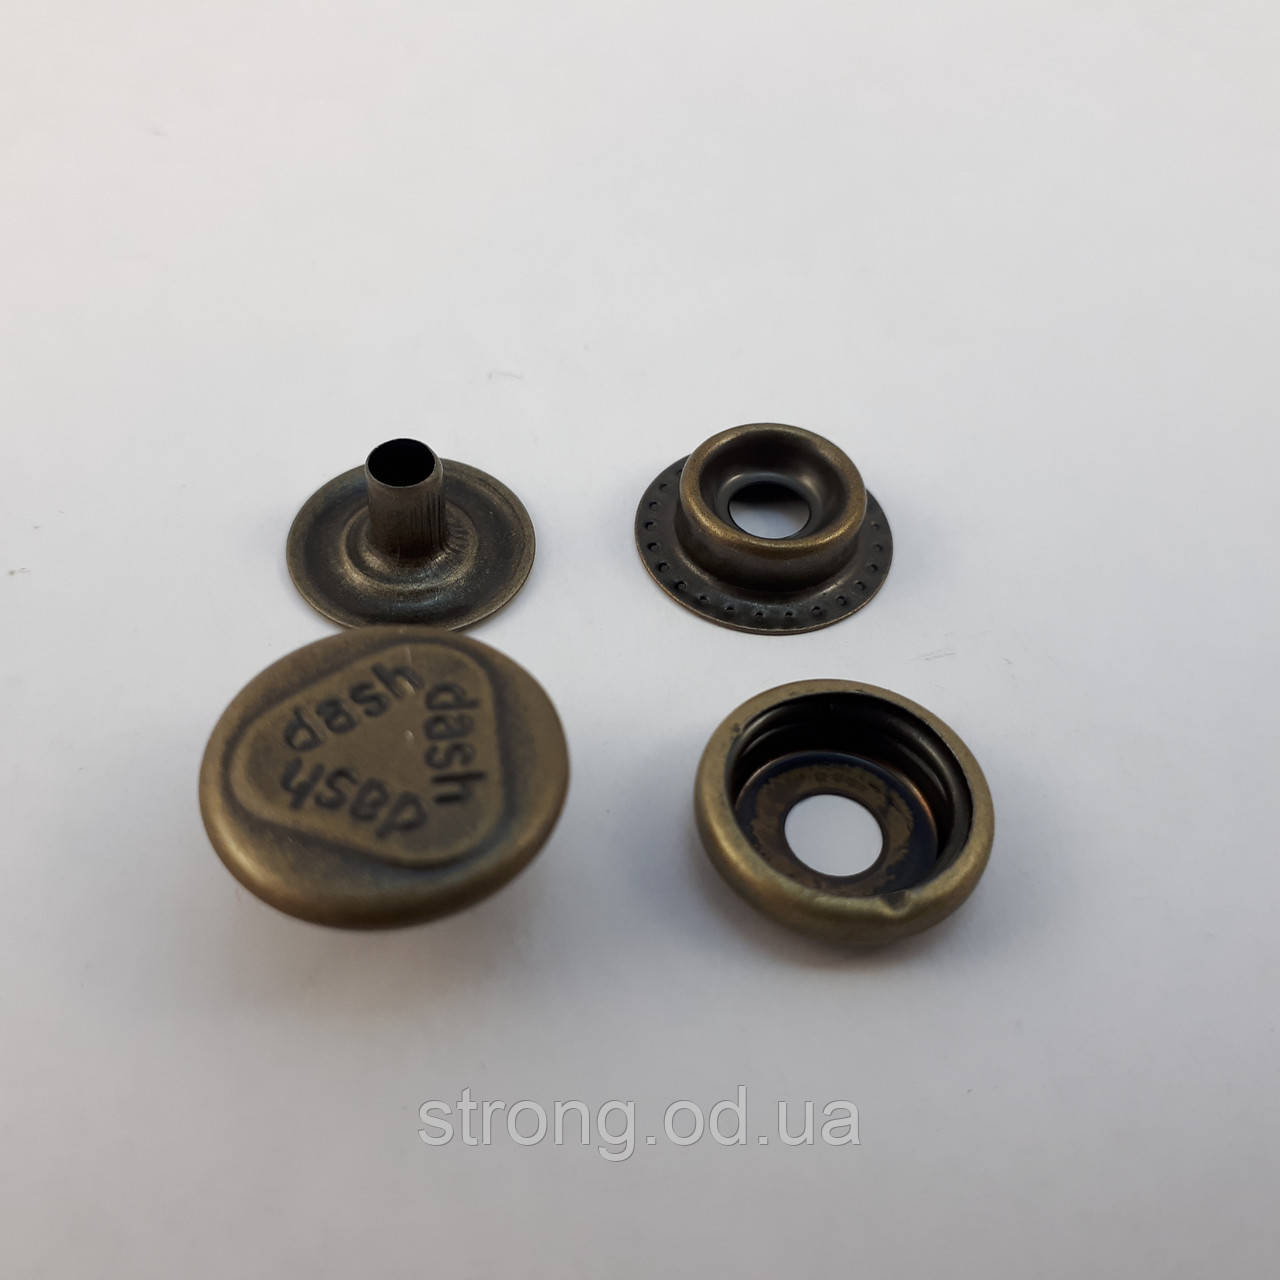 Кнопка No61 15 мм Антик dash (720 шт.) STRONG